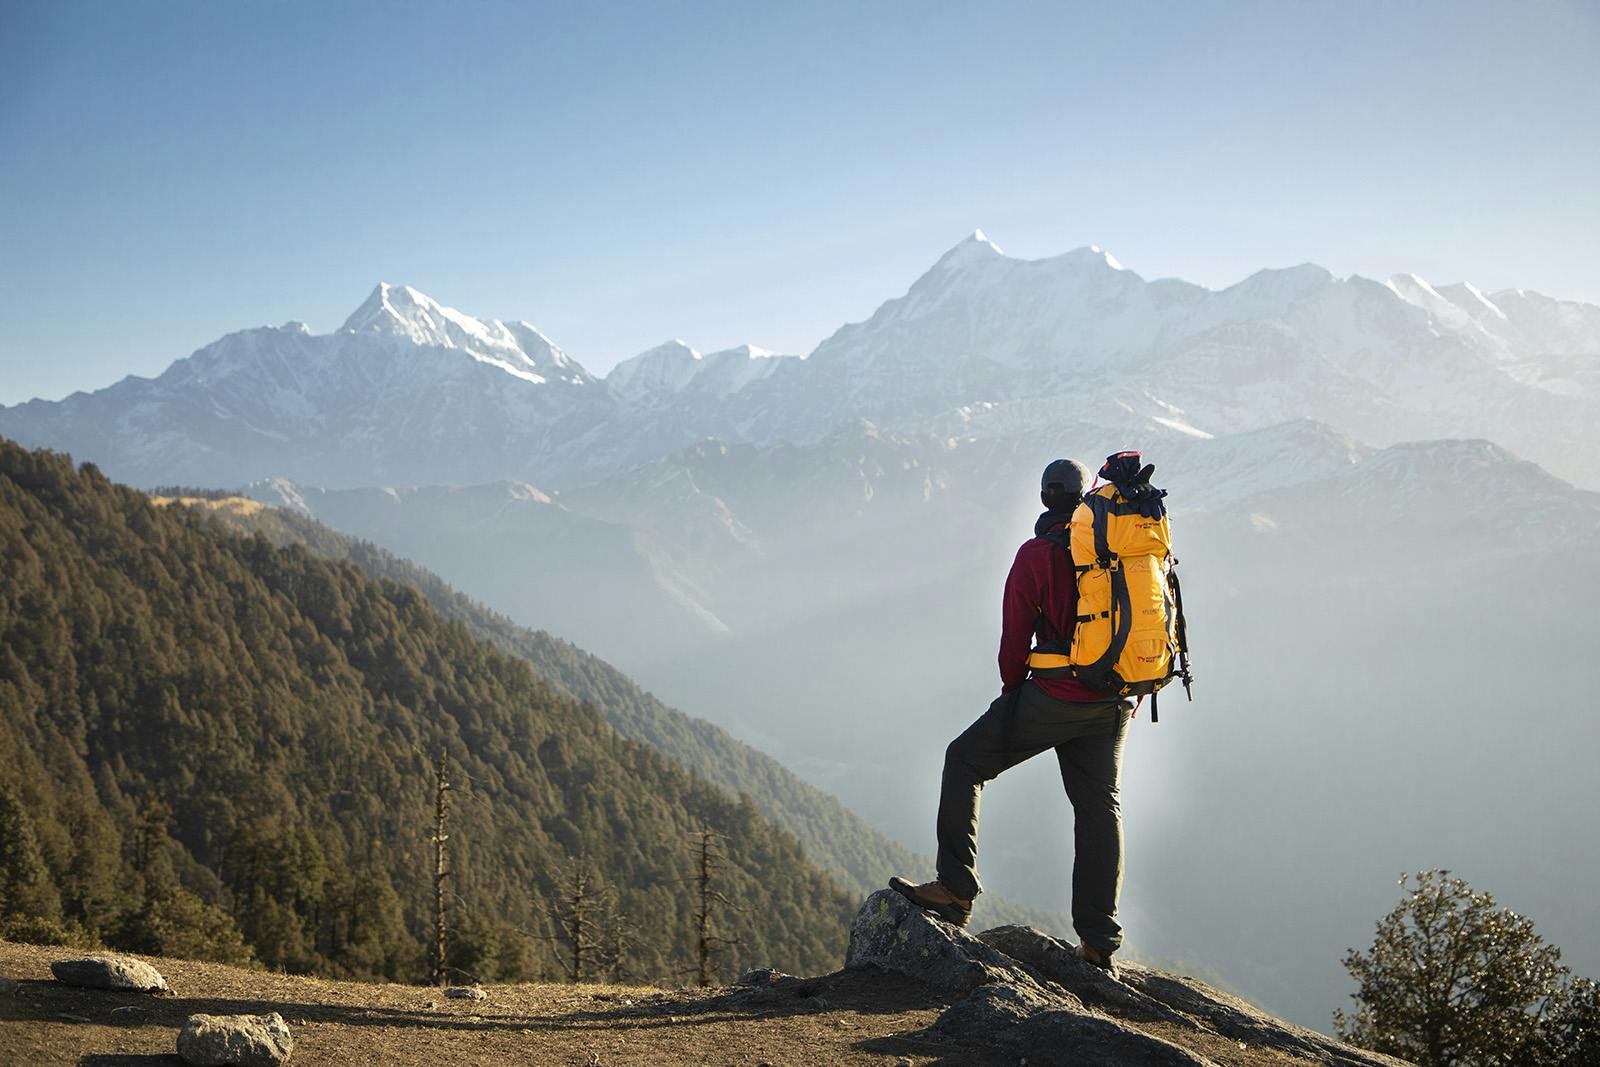 Top 6 Trekking Backpacks To Buy In India - Best Brands And Models